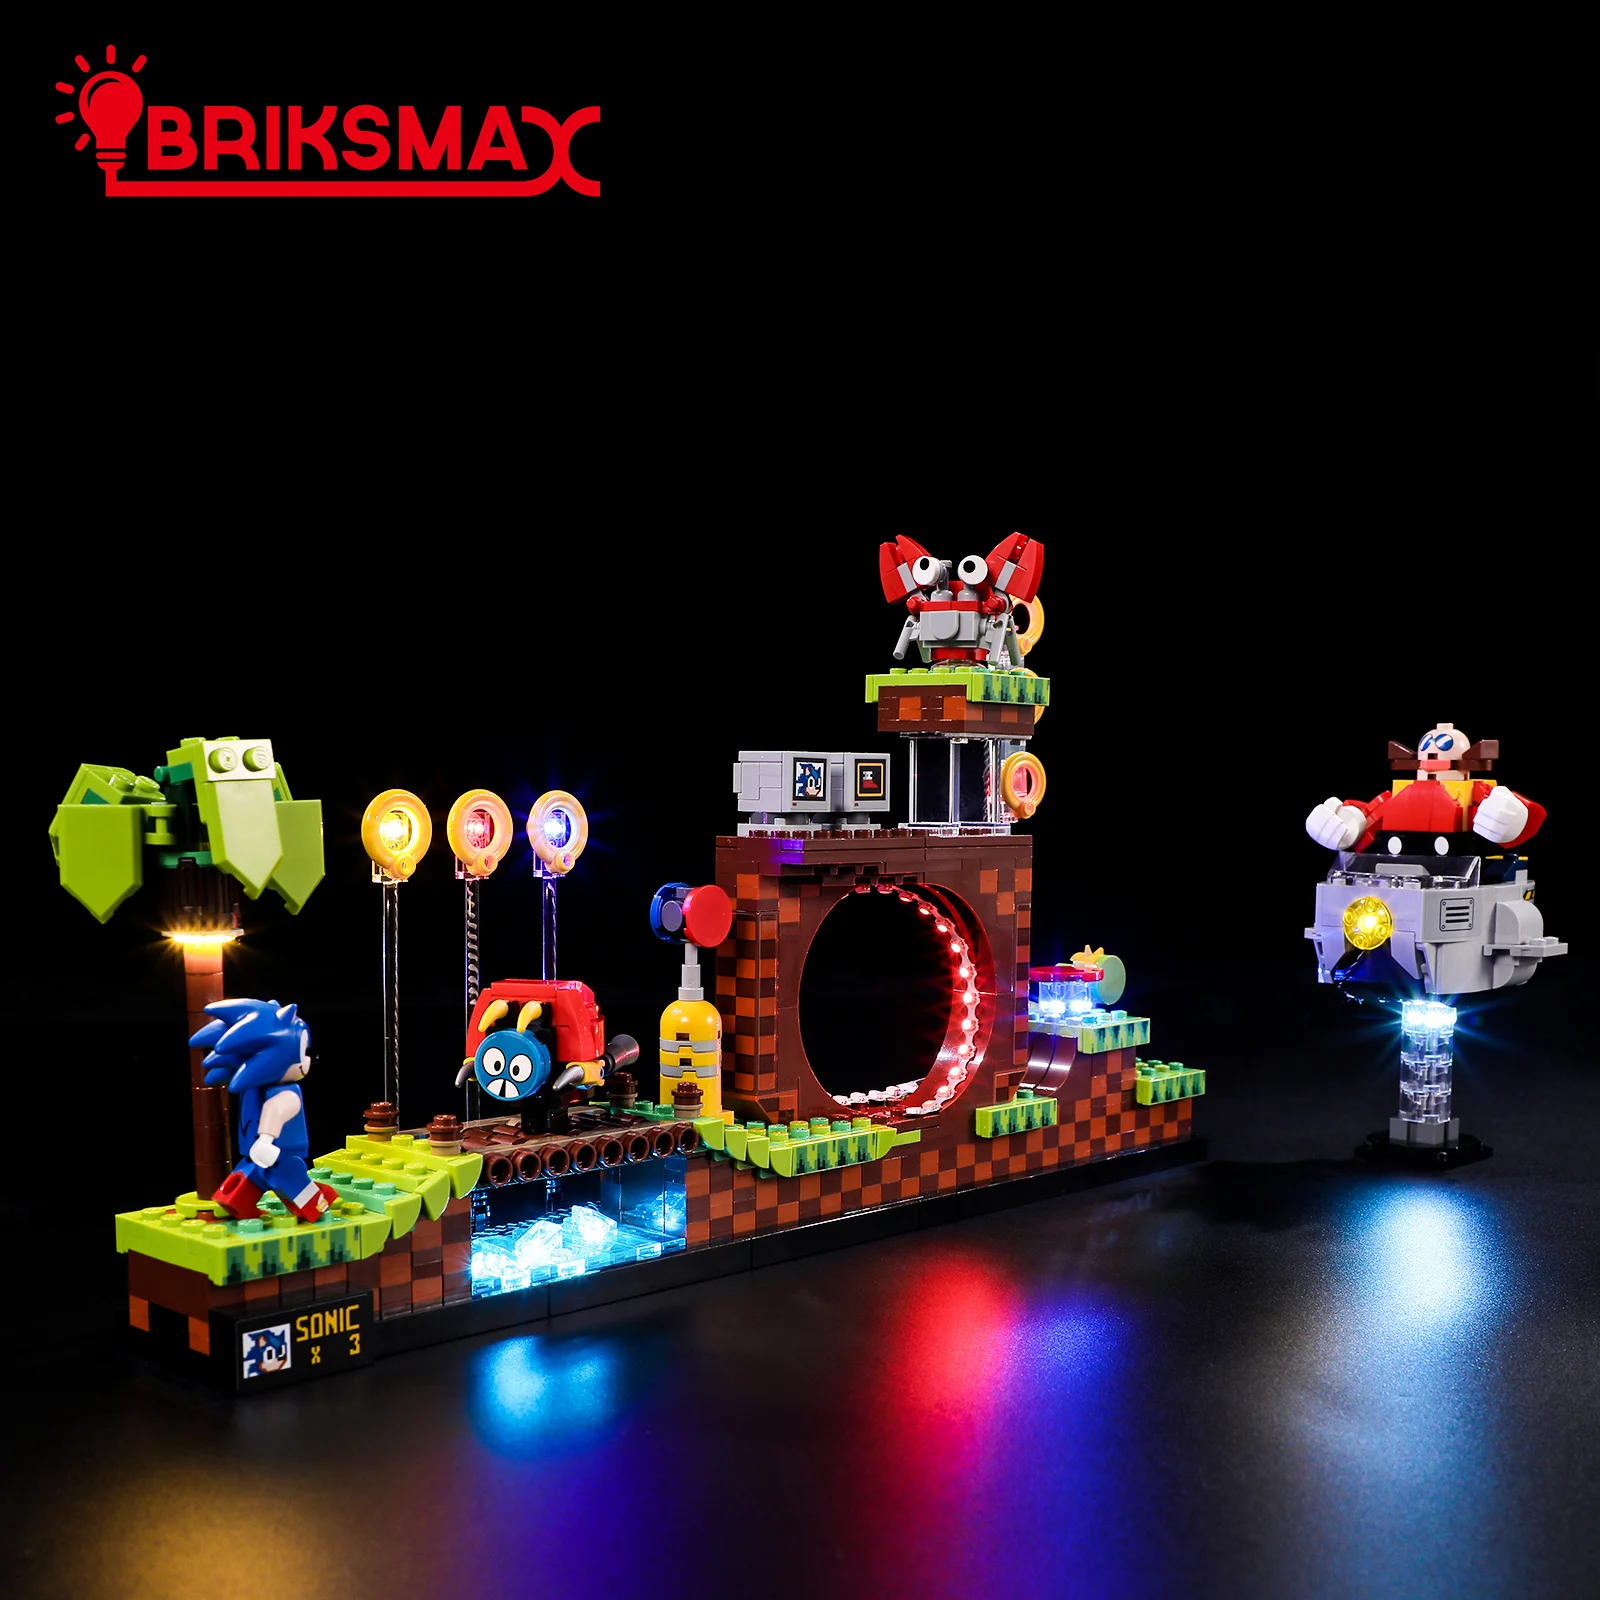 

BriksMax LED Light Kit for 21331 Green Hill Zone Building Blocks Set (NOT Include the Model) Toys for Children